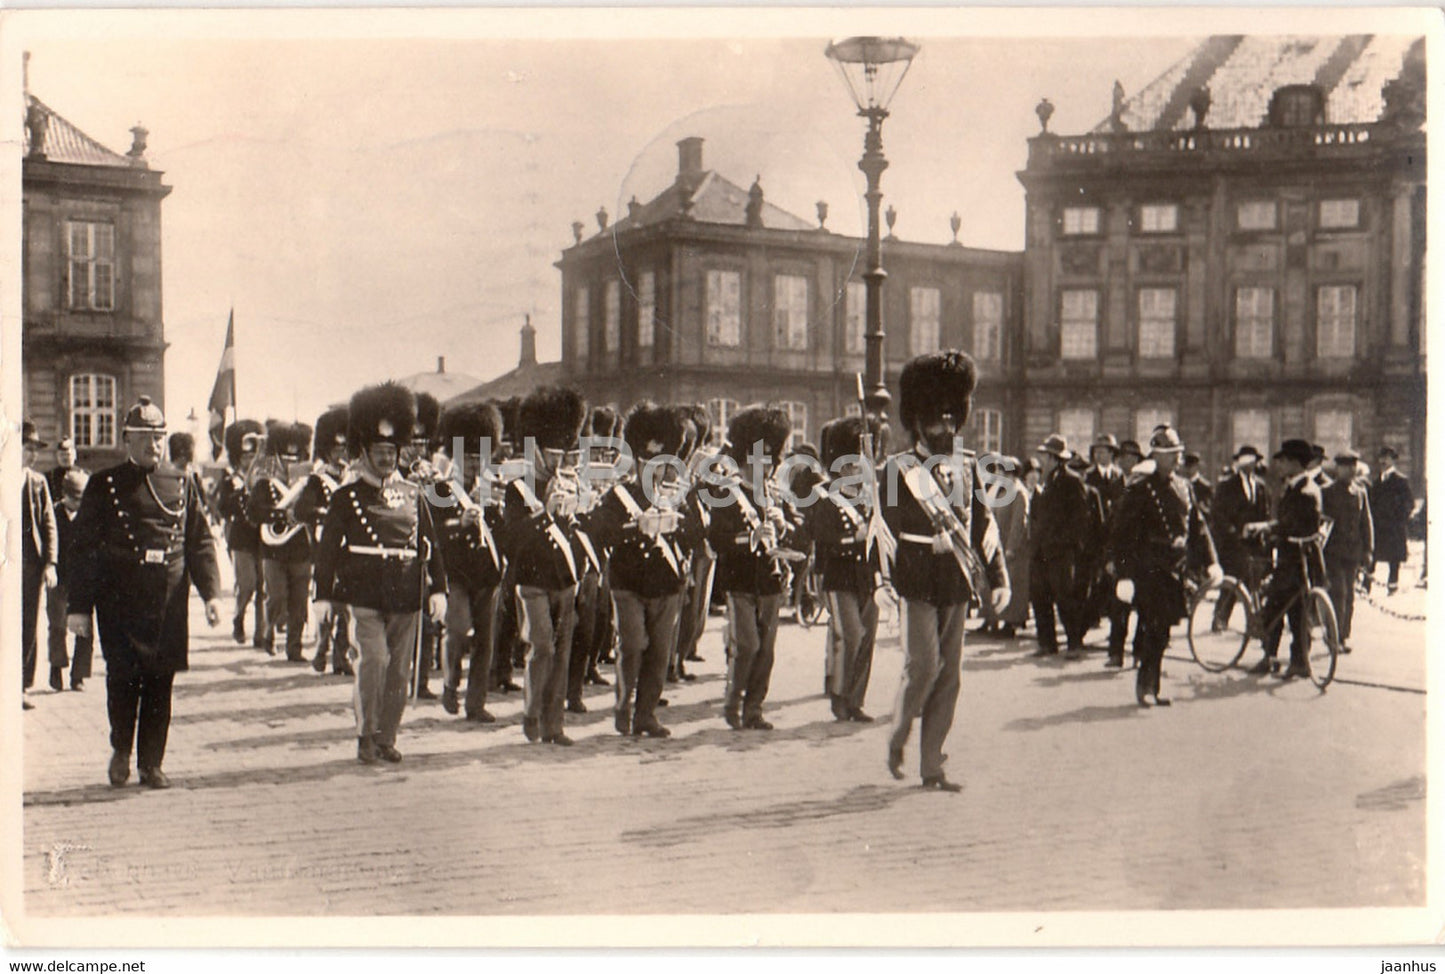 Copenhagen - Kobenhavn - Vagtparaden - The Changing of the Guard - 96 - old postcard - 1938 - Denmark - used - JH Postcards